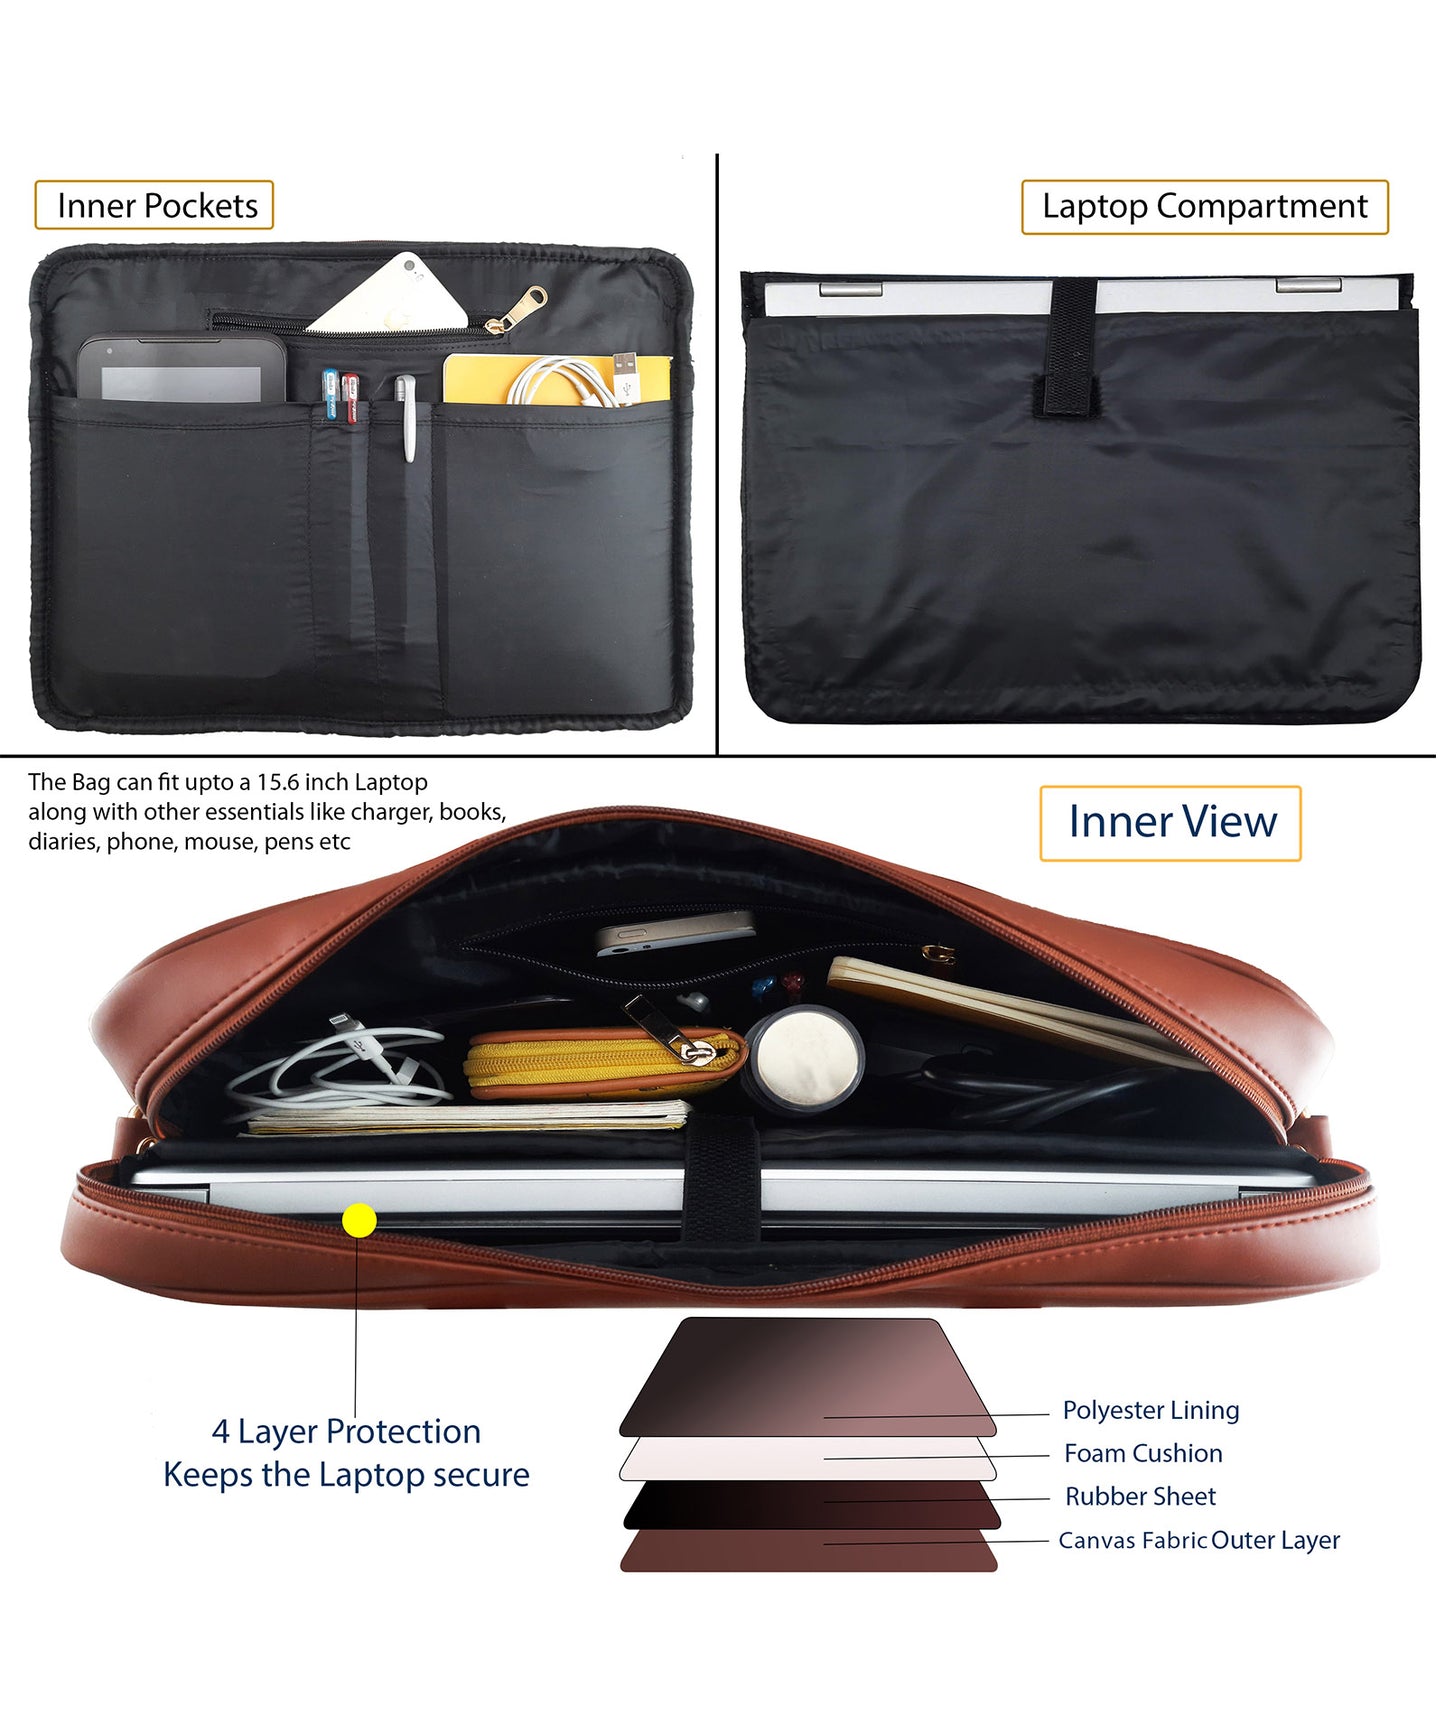 Combo Offers :Doll One Pocket Laptop Turq Bag & Pocket Teal Wallet